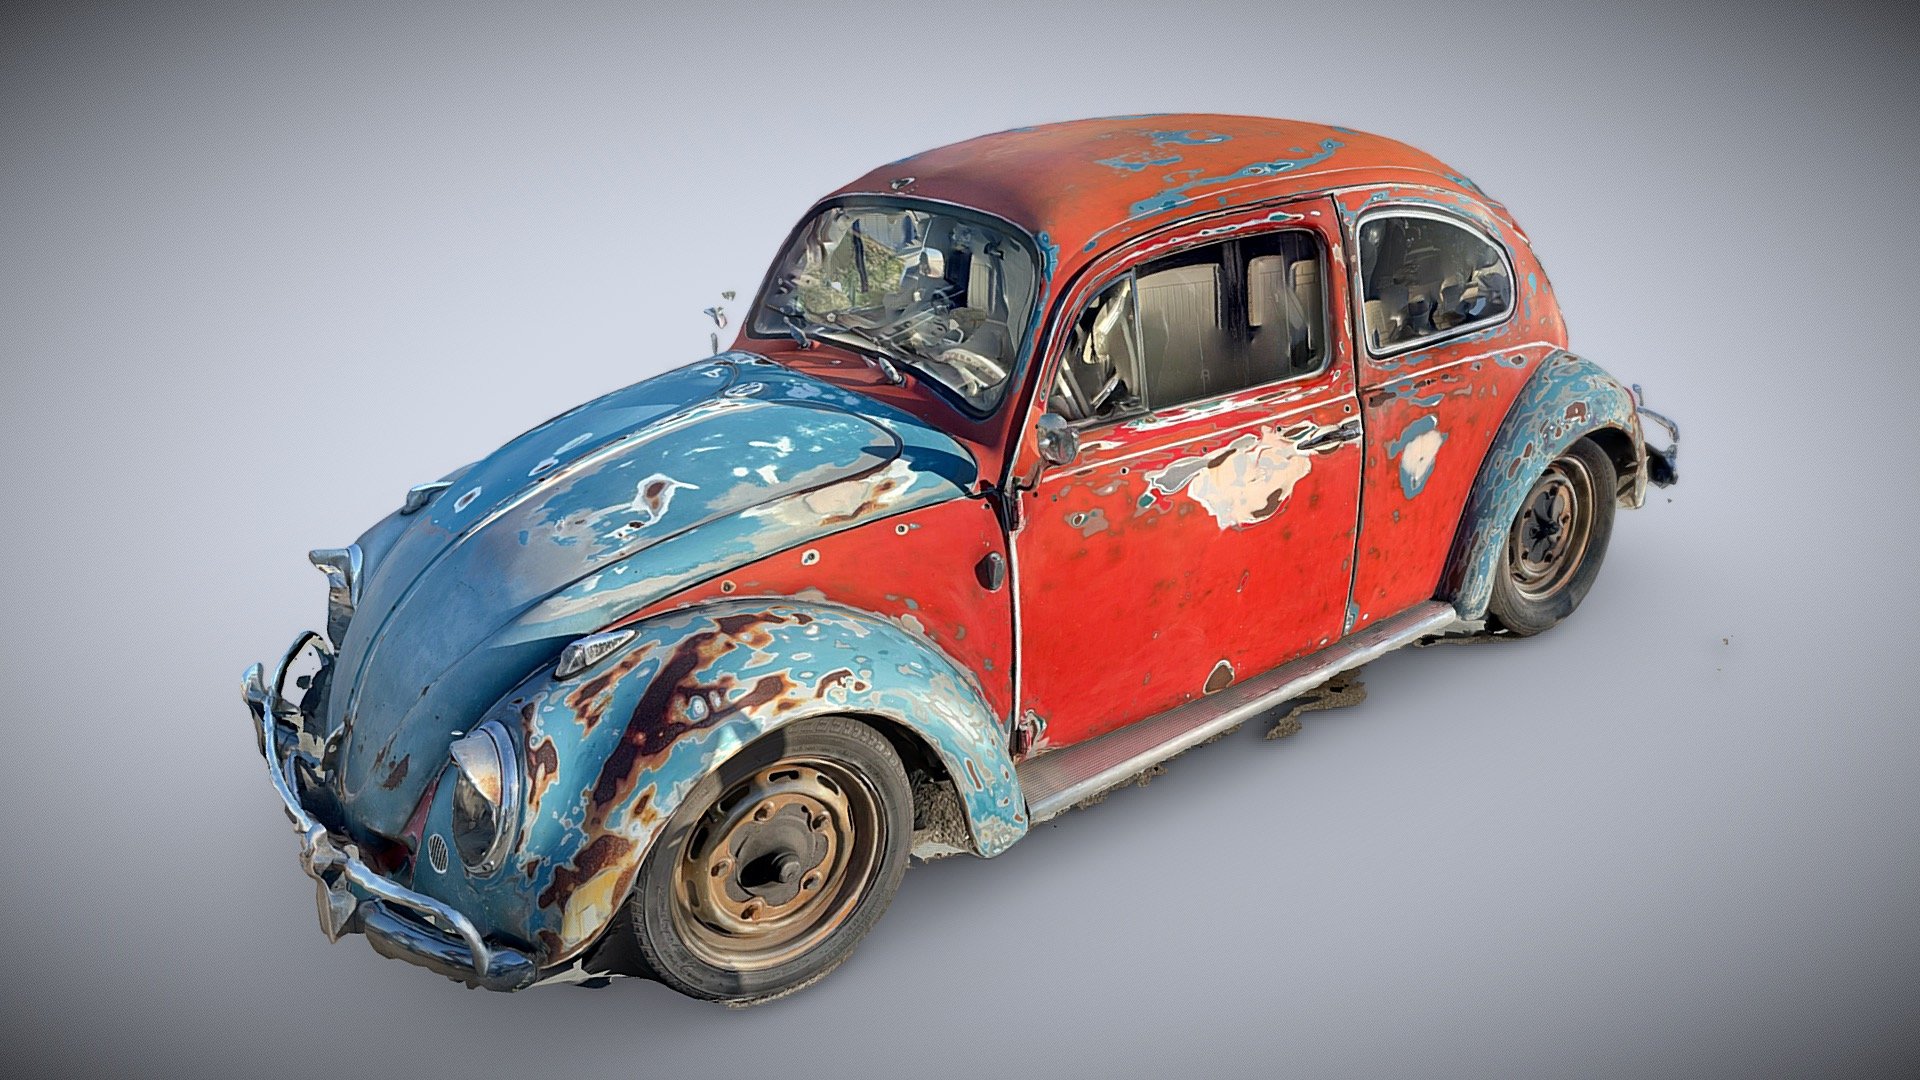 Old VW Bug